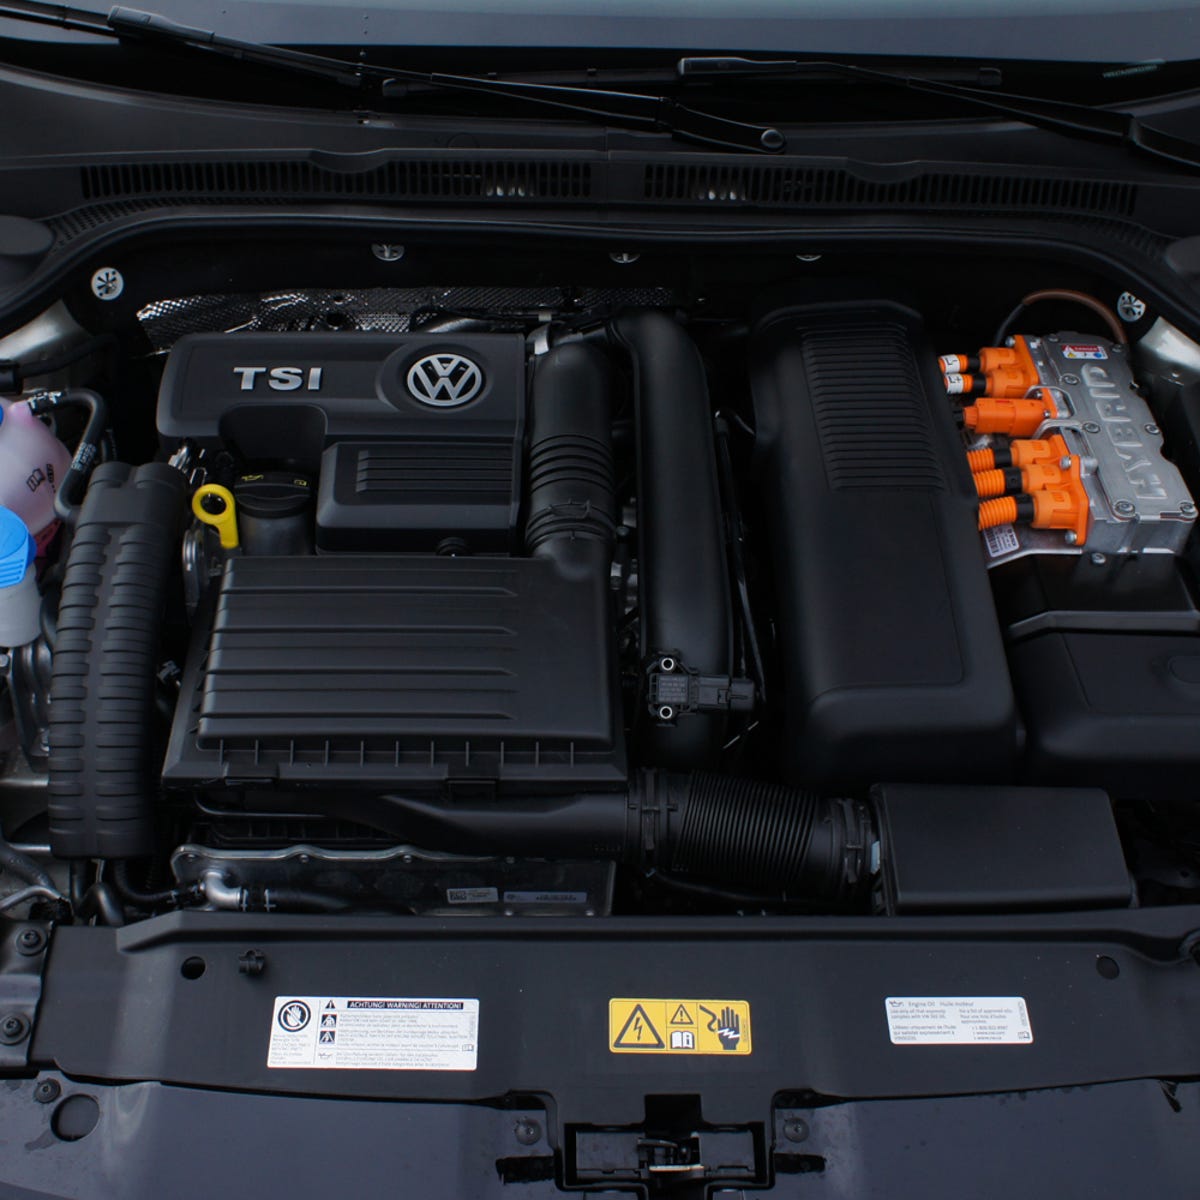 2013 Volkswagen Jetta Hybrid review: Jetta Hybrid beats even diesel fuel  economy - CNET